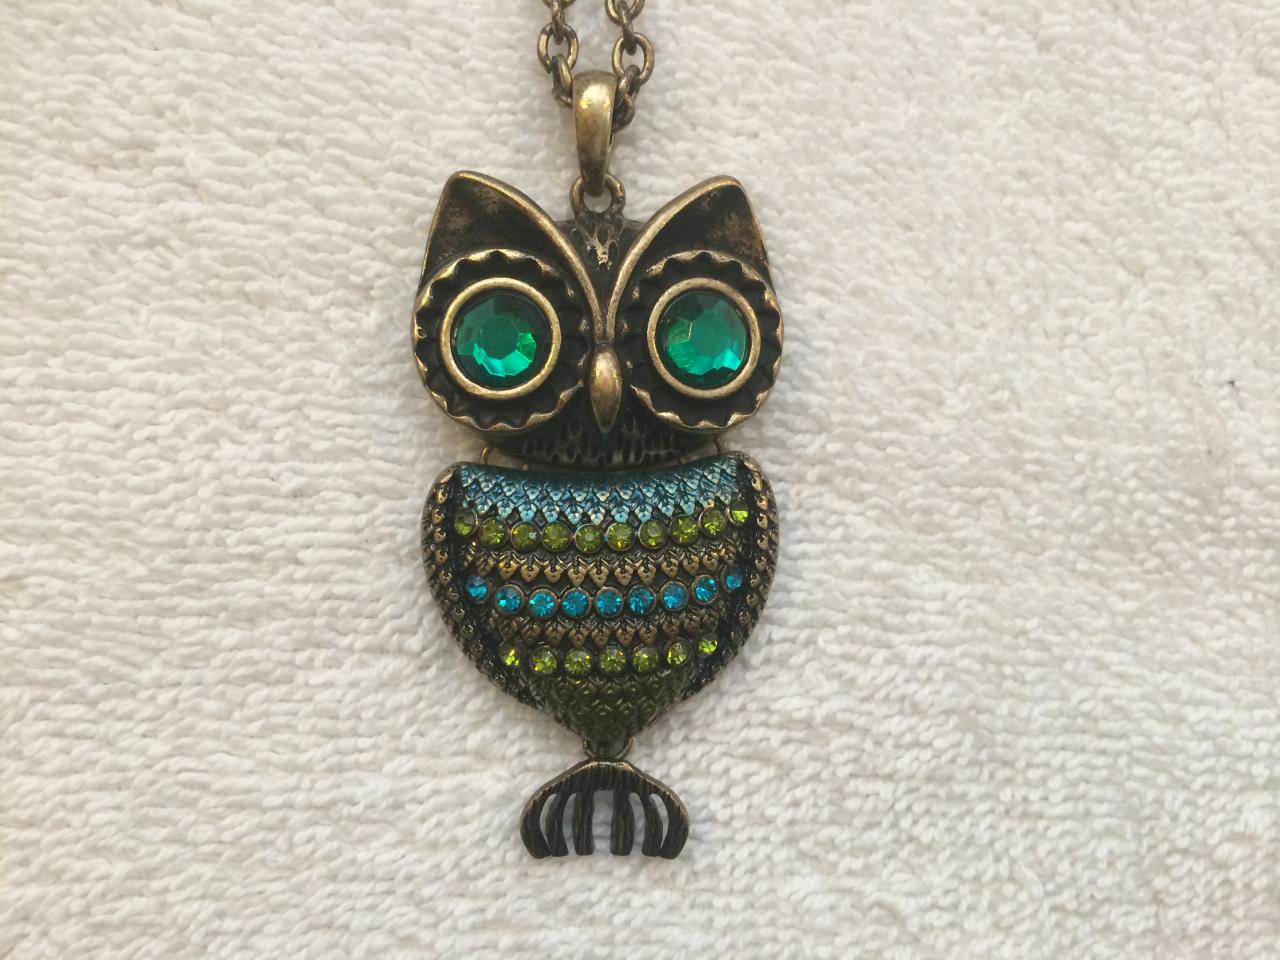 Owl Blue & Green Rhinestone Pendant Necklace Jewelry Fashion Bling Gold Tone #139